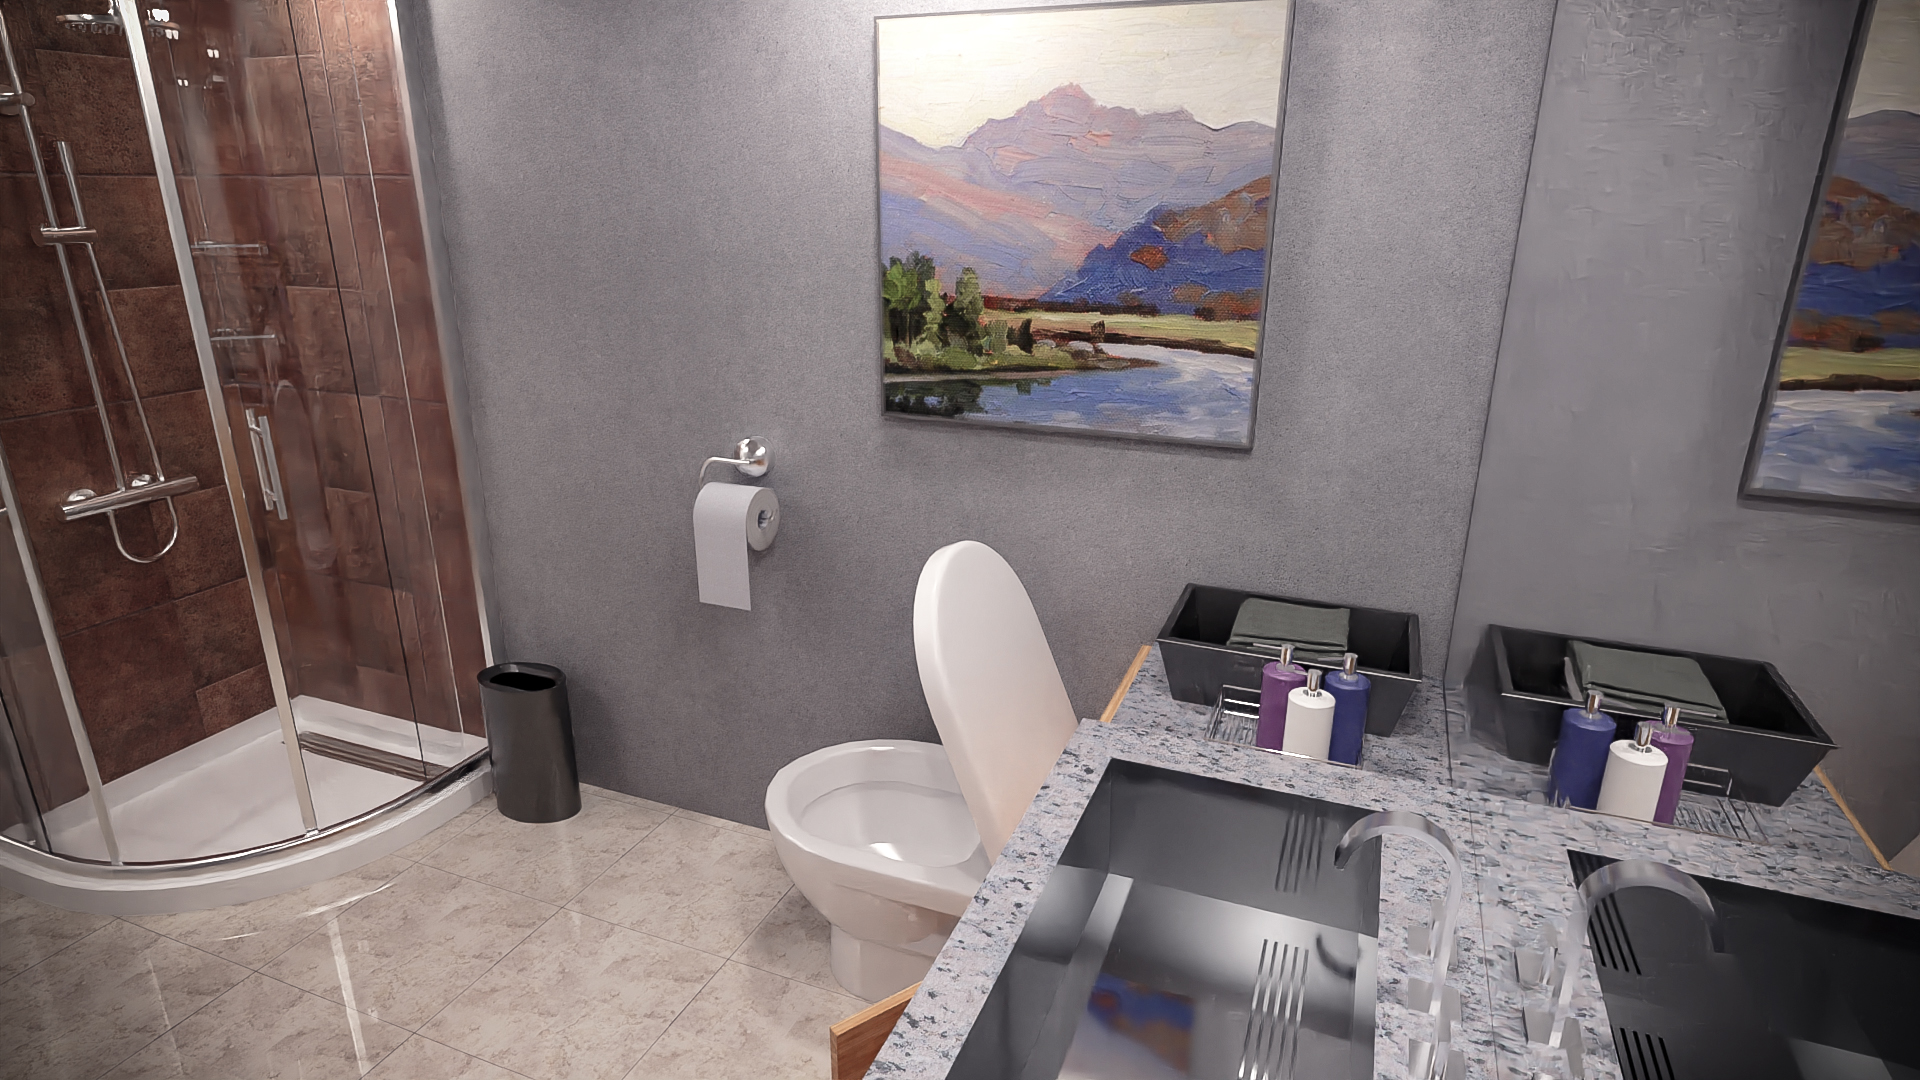 Lovable Bathroom by: Tesla3dCorp, 3D Models by Daz 3D